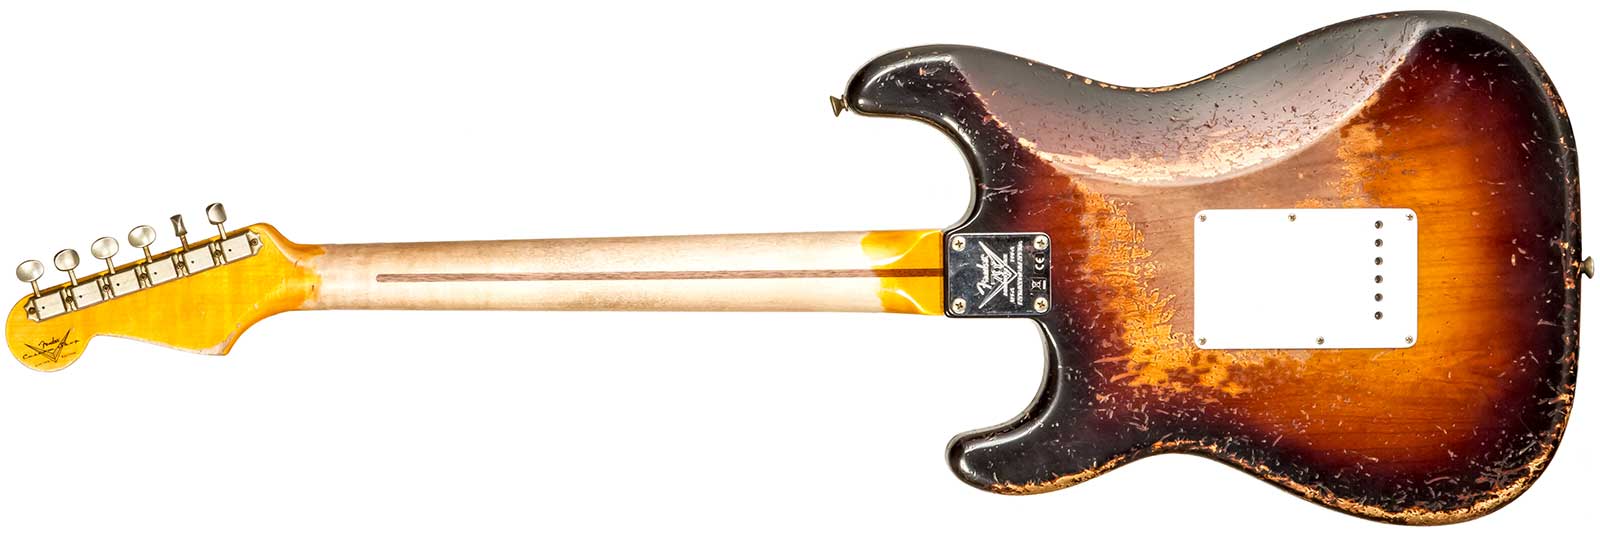 Fender Custom Shop Strat 1954 70th Anniv. Mn #xn4378 - Super Heavy Relic 2-color Sunburst - Str shape electric guitar - Variation 1